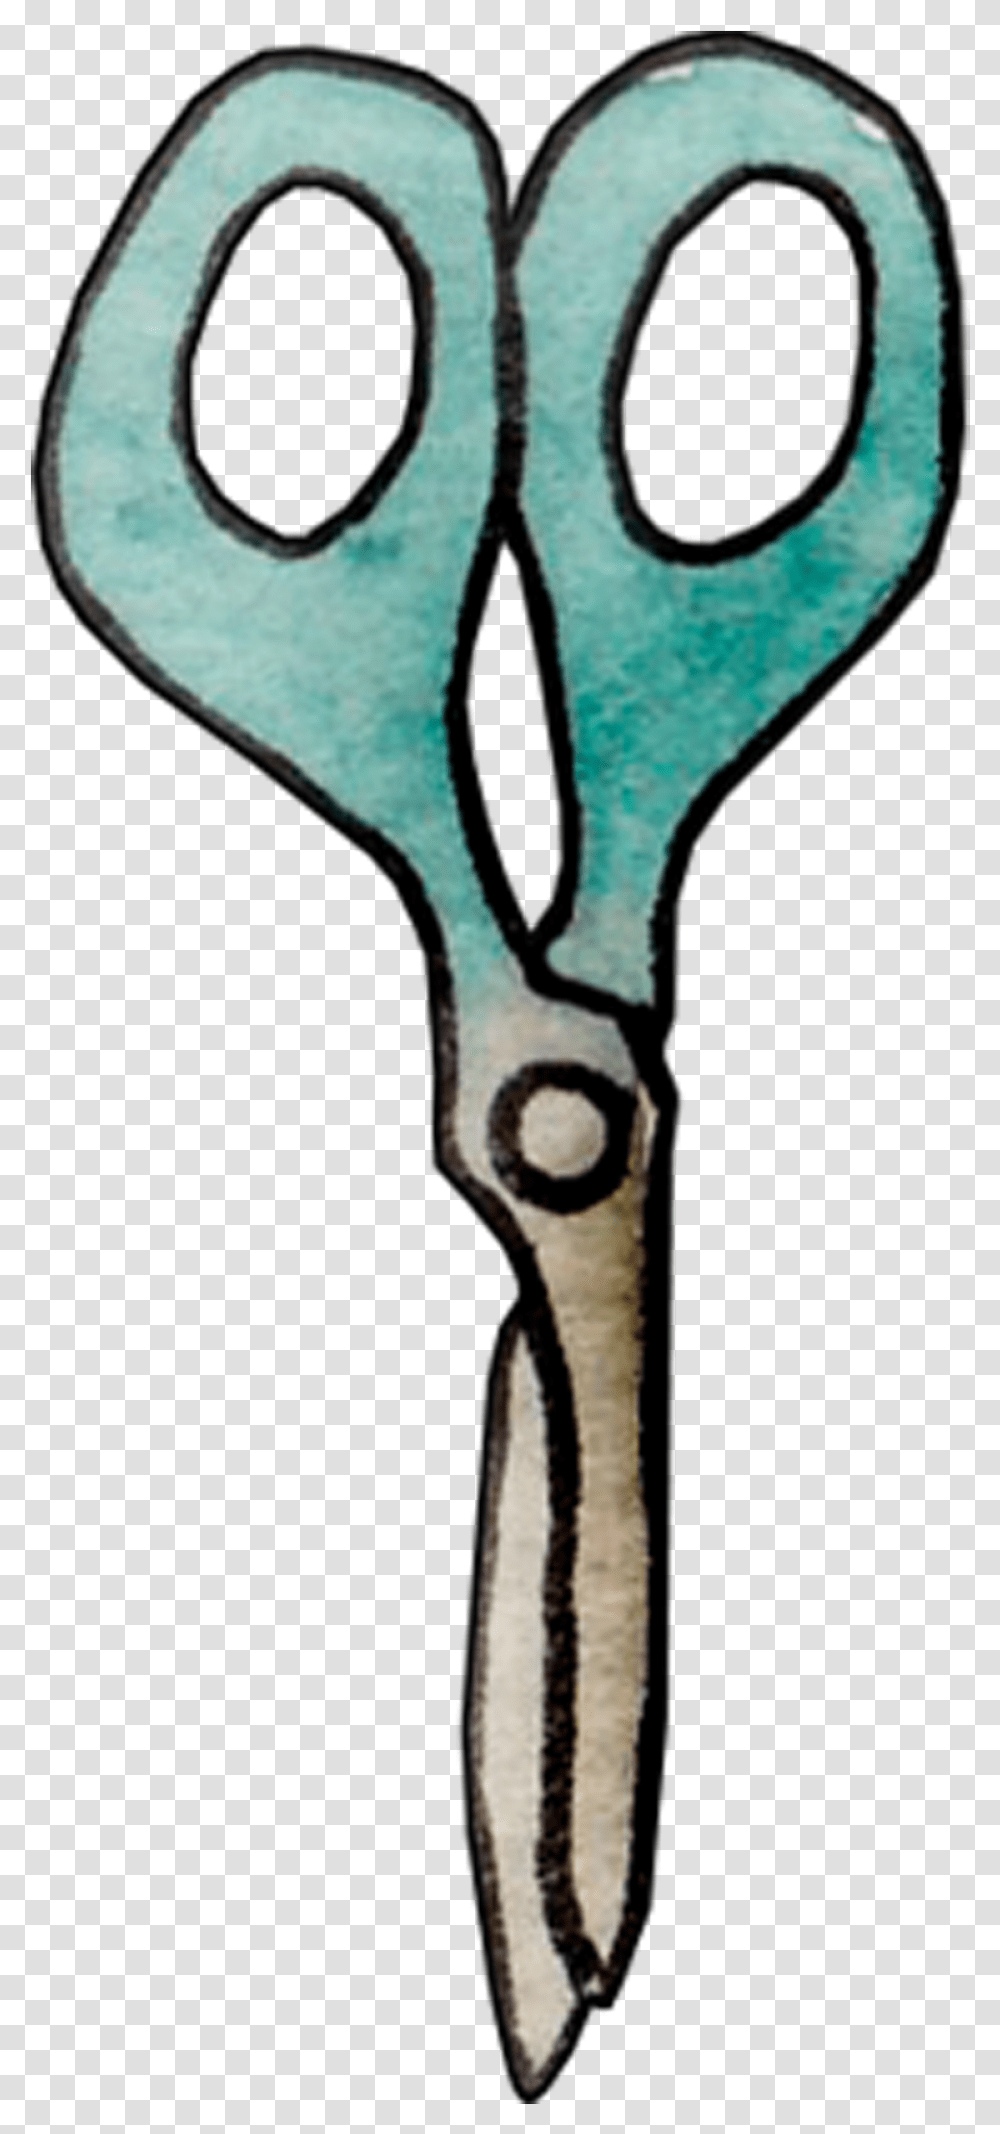 Scissors Commodity Watercolor Painting Clip Art Watercolor Scissors, Weapon, Weaponry, Blade, Shears Transparent Png